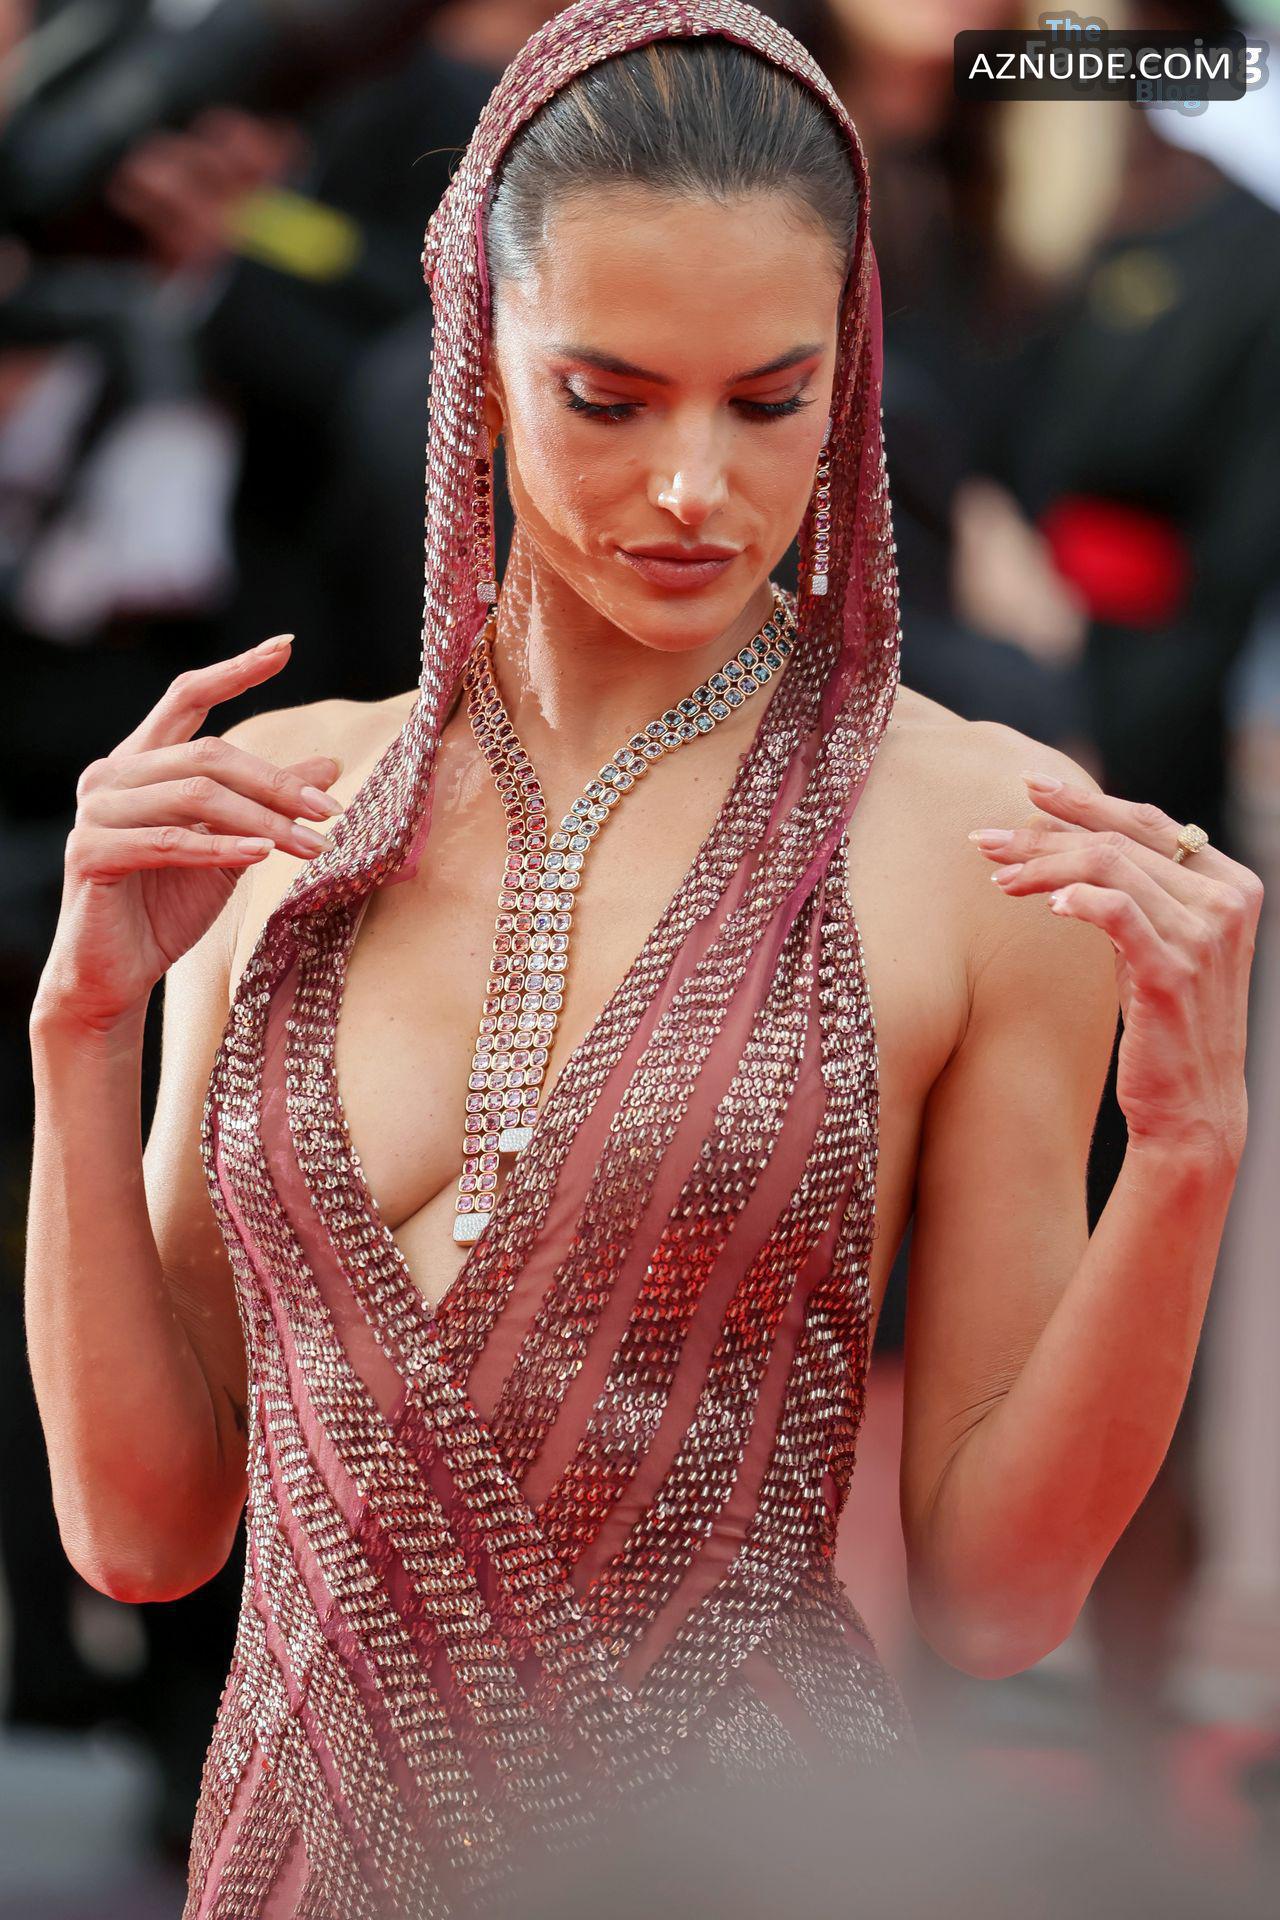 Alessandra Ambrosio Flaunts Her Sexy Tits At Cannes Film Festival Aznude